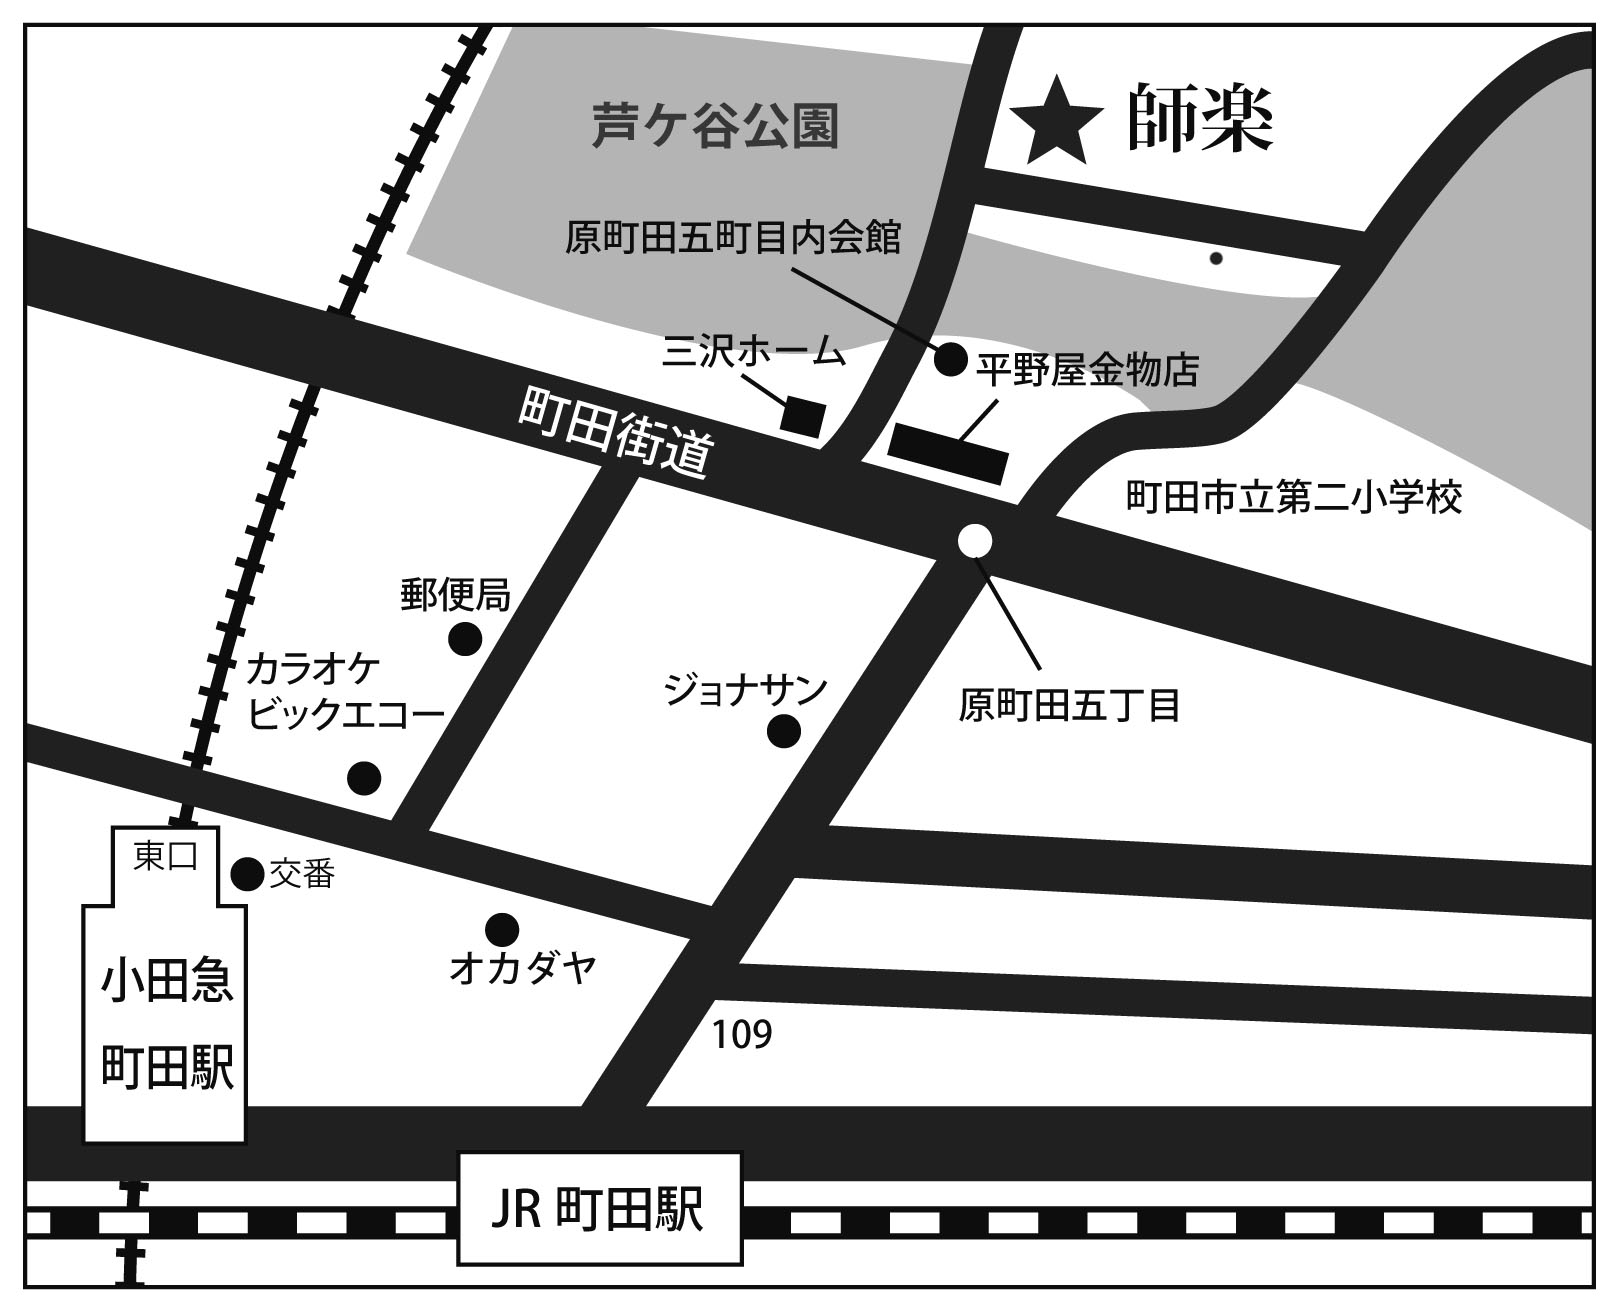 Map 道案内 東京 神奈川県の境にある町田市 相模原市陶芸教室師楽